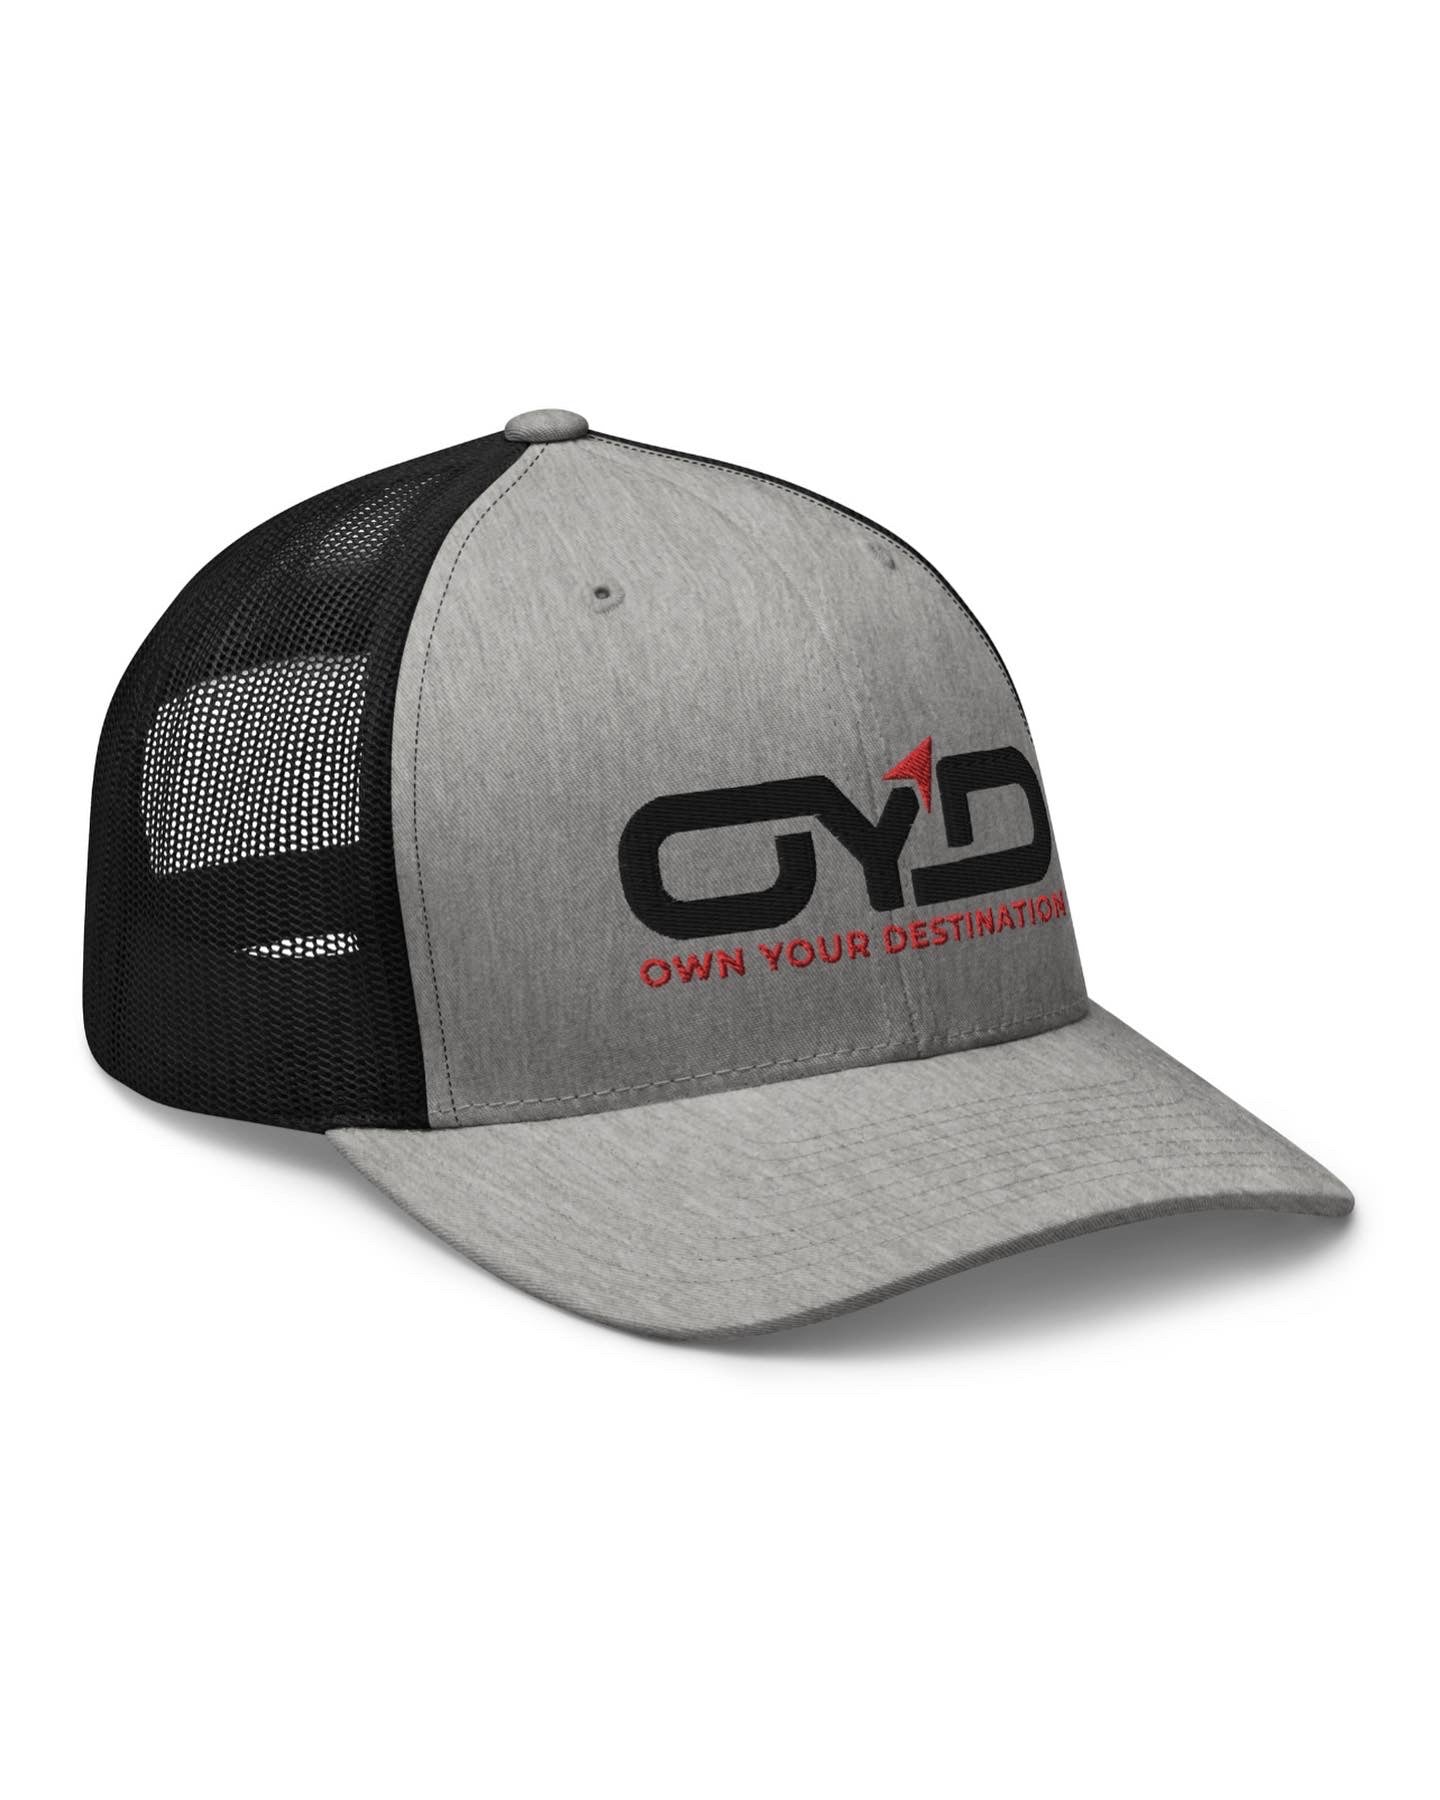 OYD - Destination Trucker